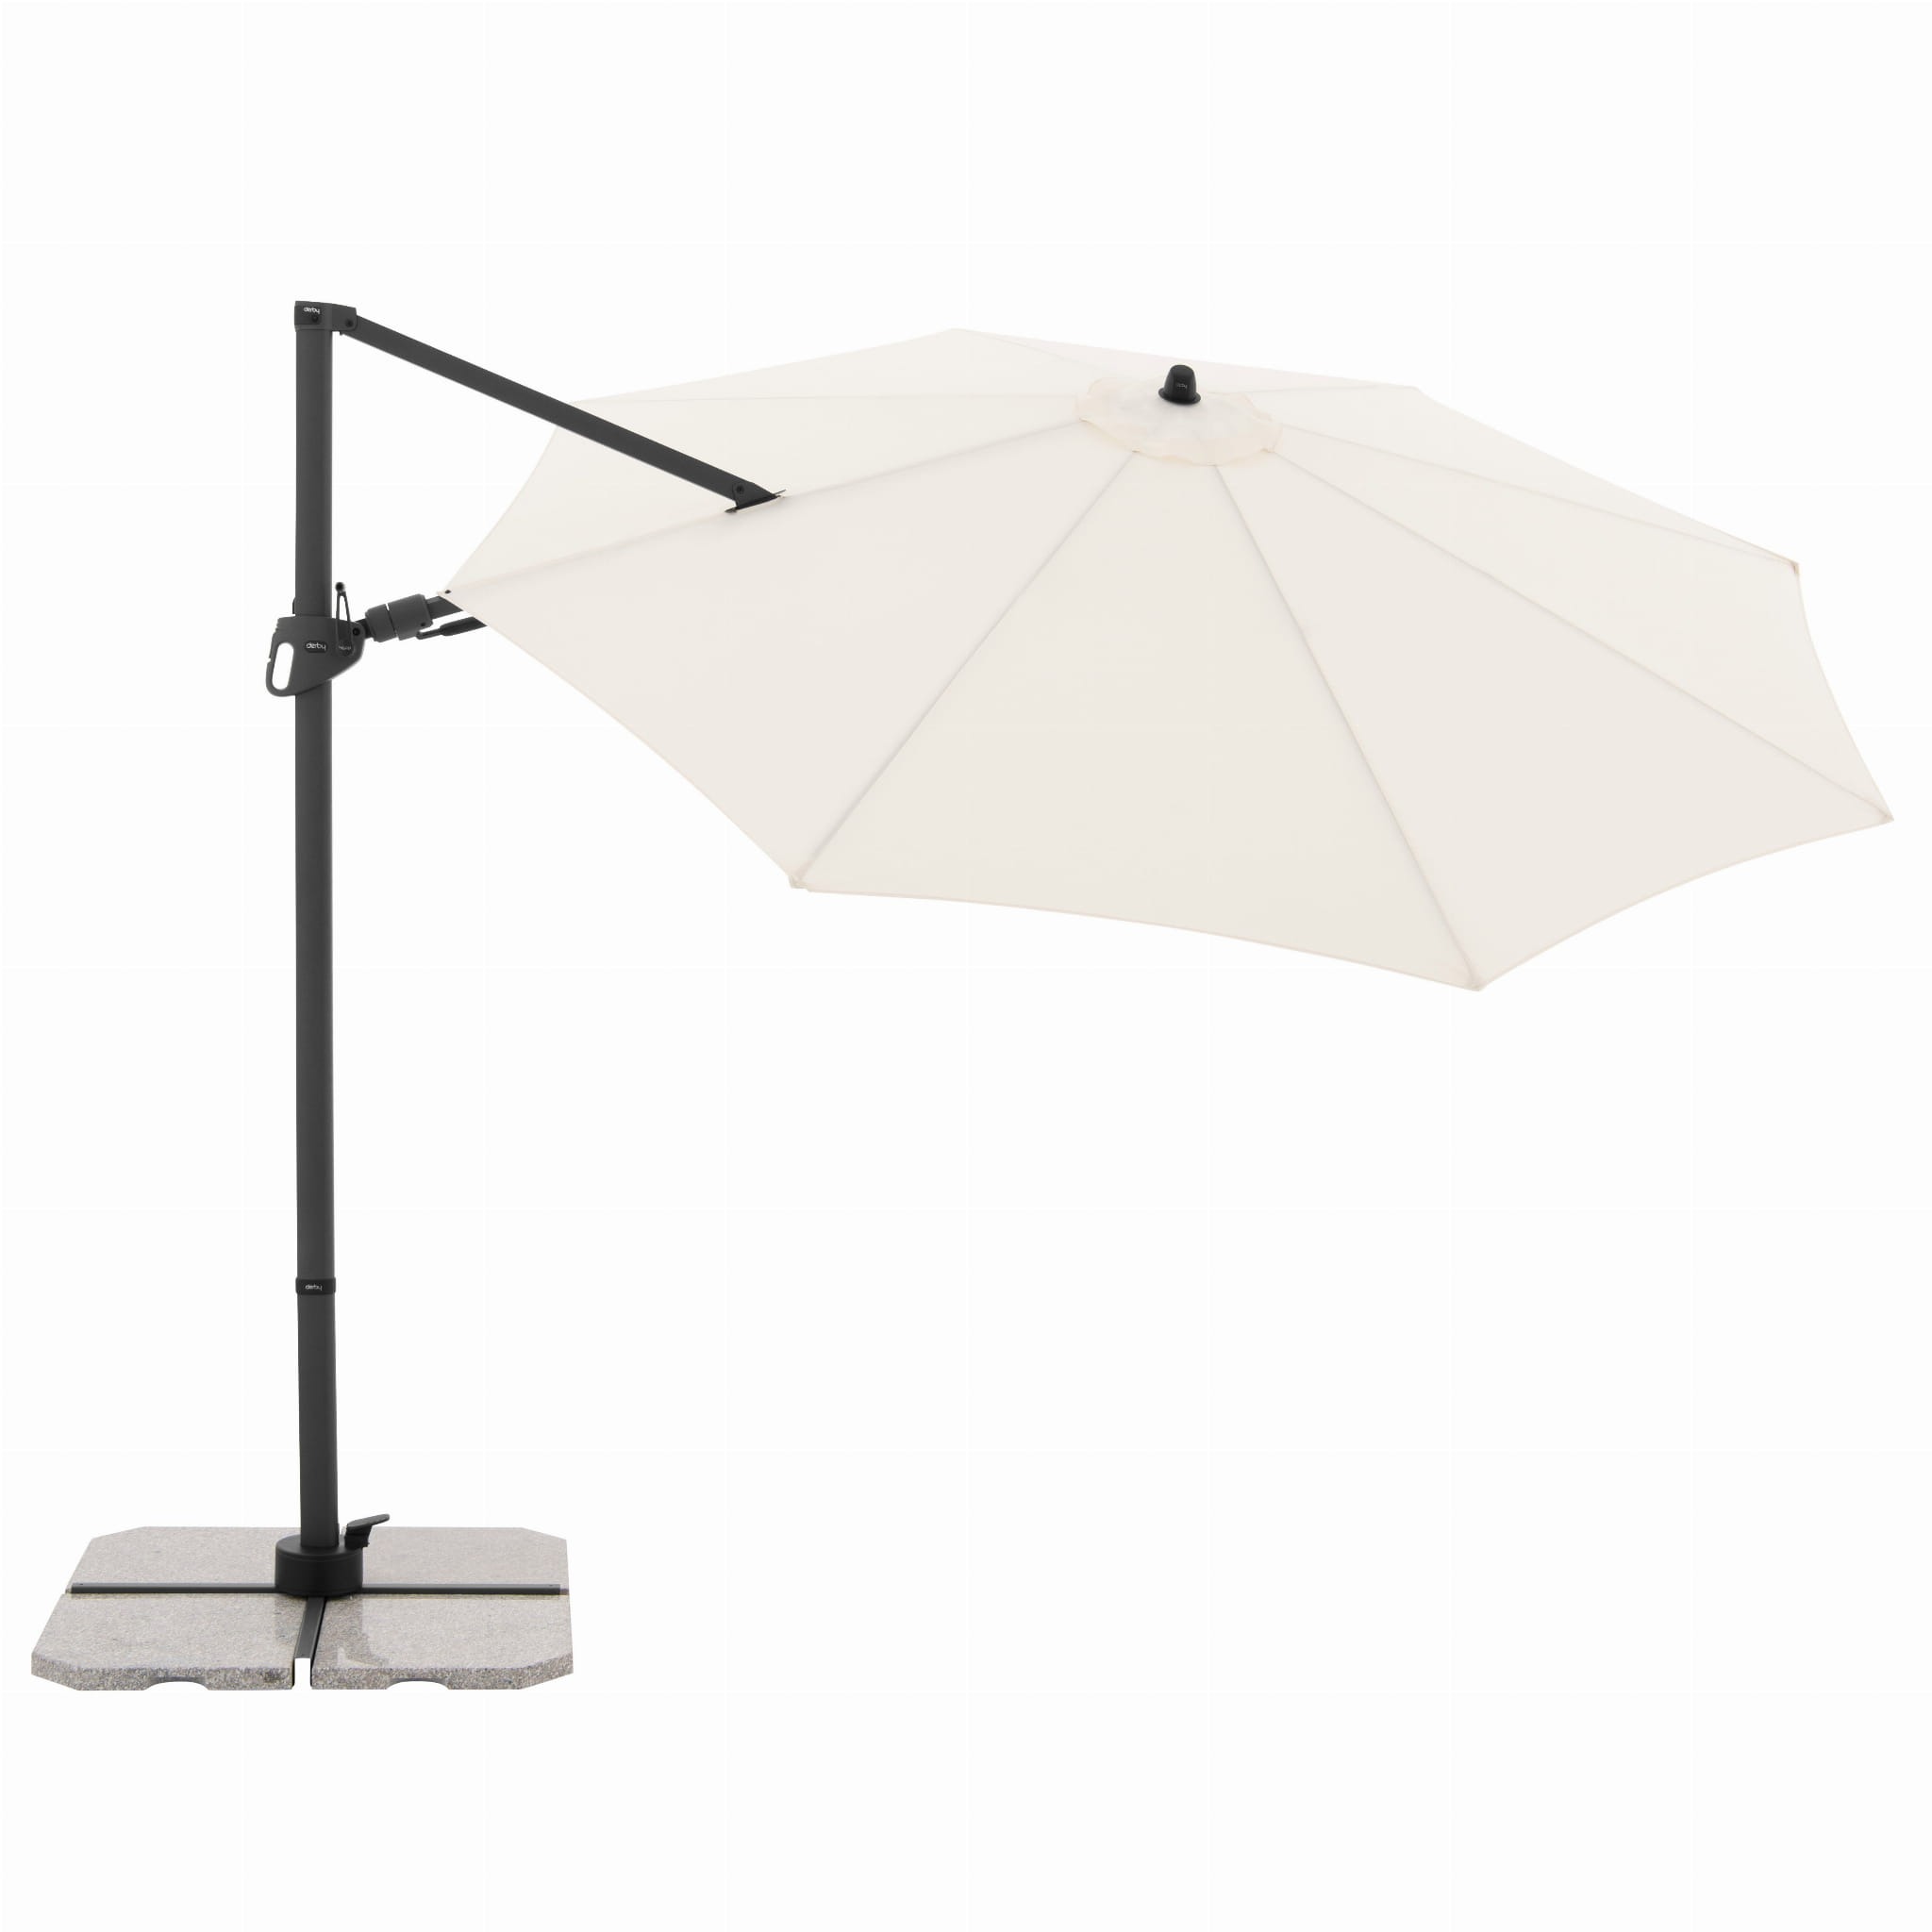 Зонт садовый Doppler Derby DX бежевый 335 см без подставки зонт doppler 7443163 dma ут 00012390